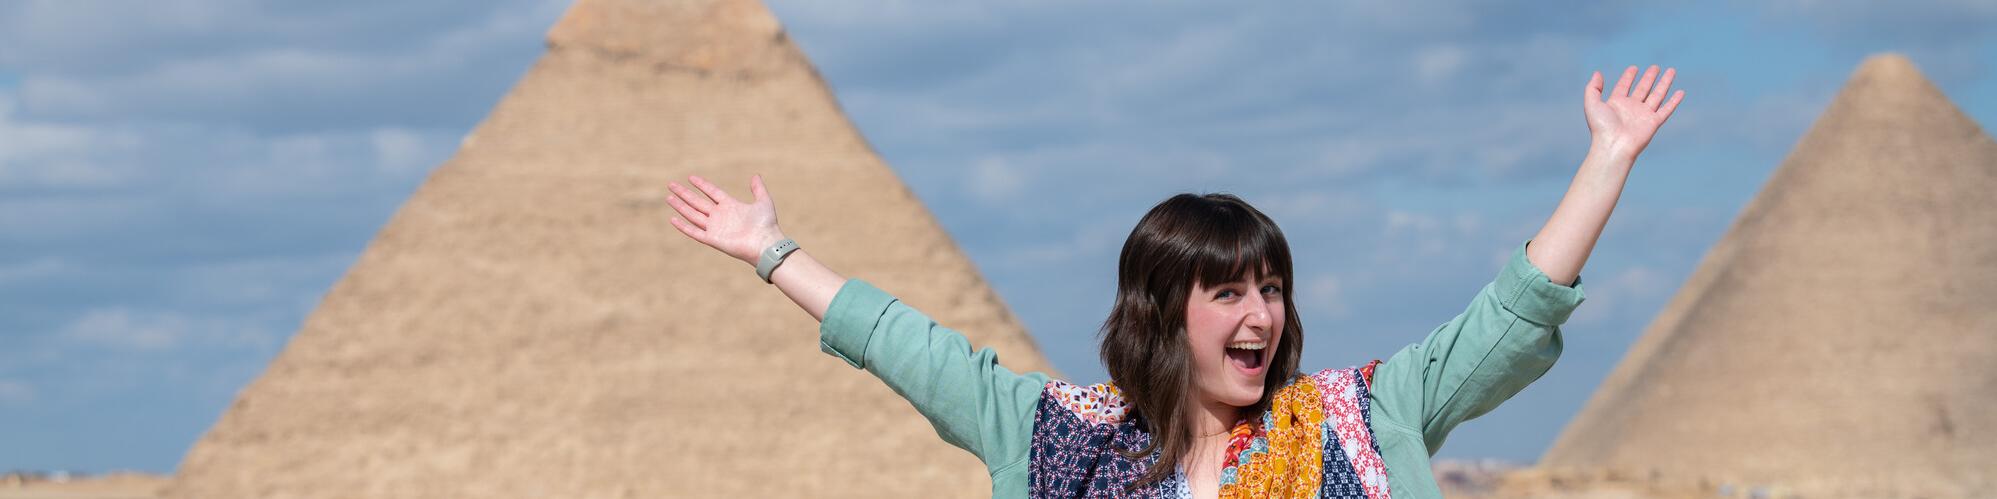 International student at the pyramids